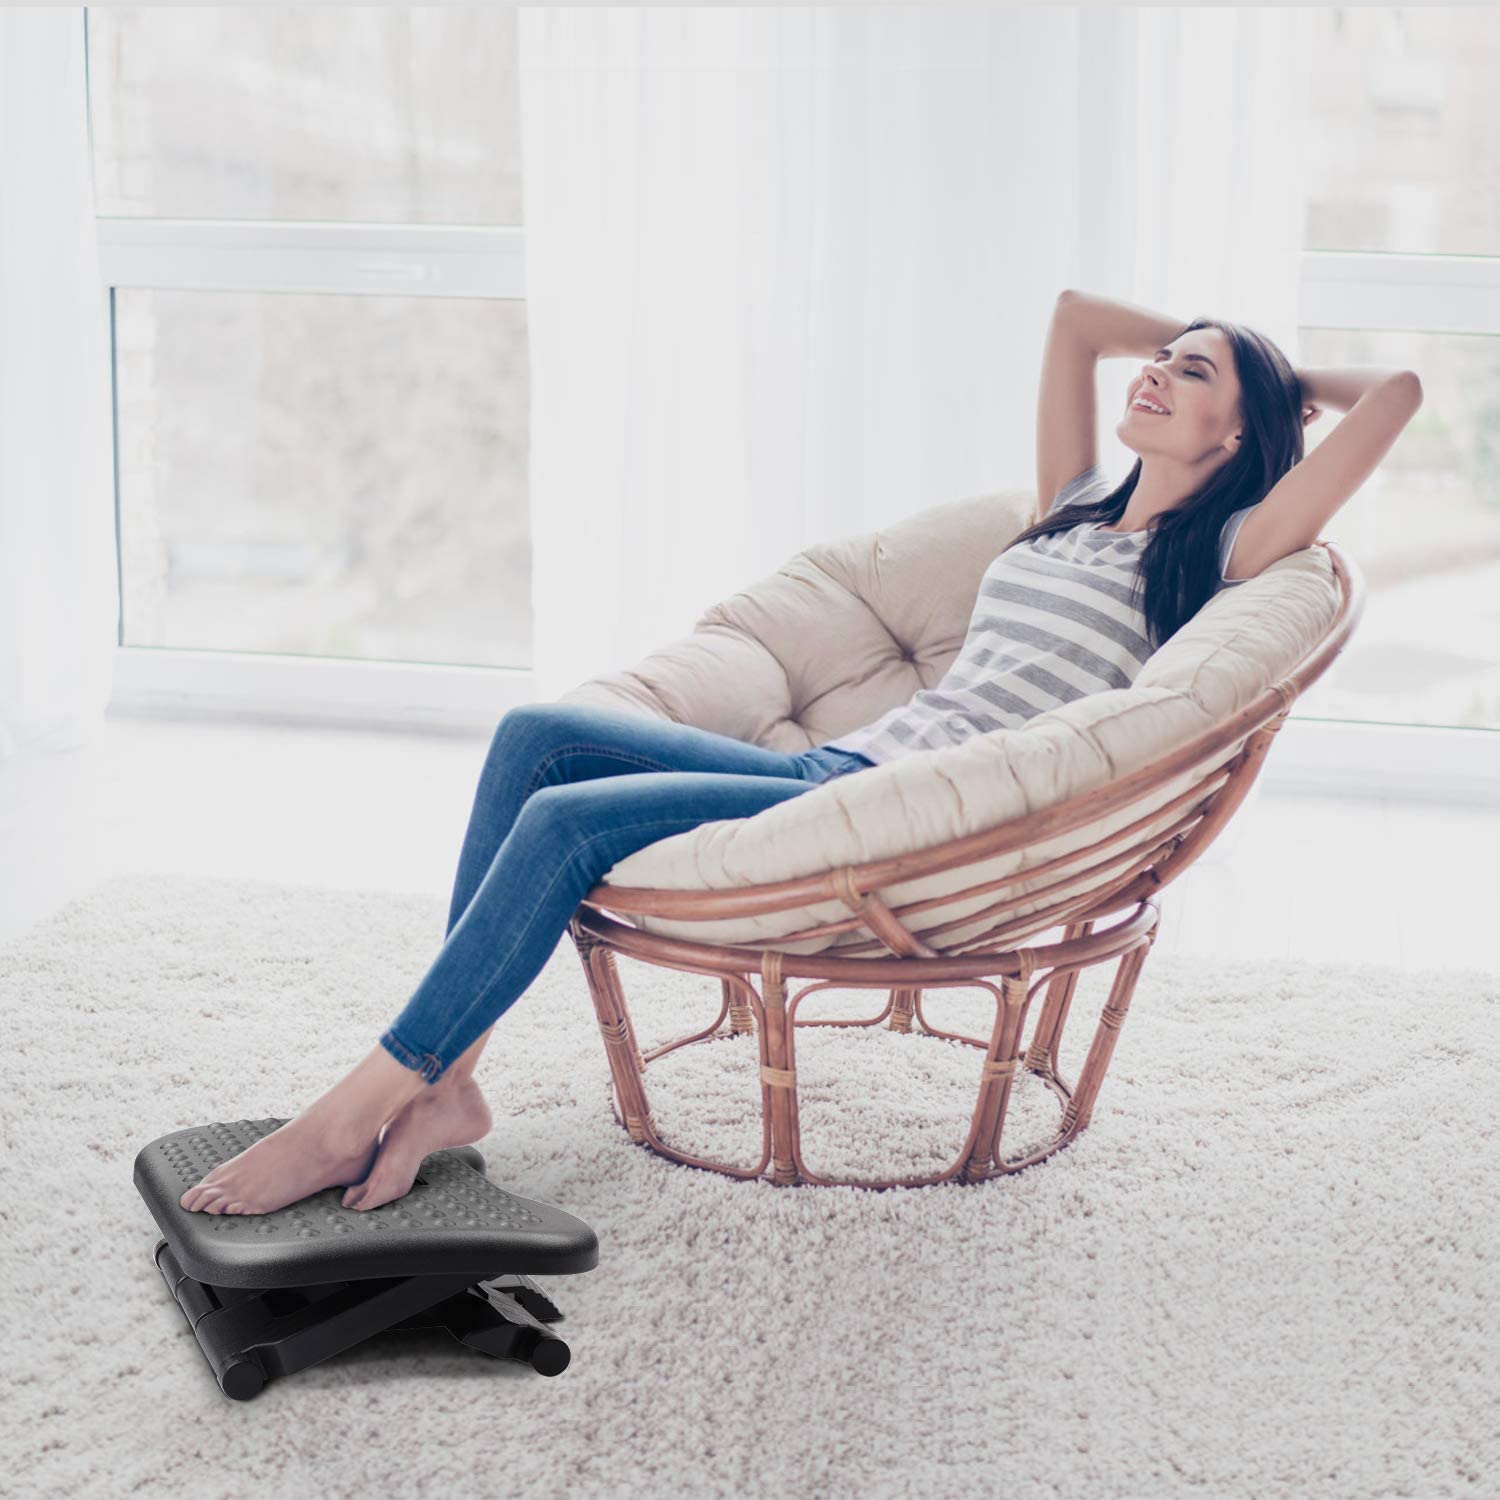 Footrest Under Desk - Adjustable Foot Rest with Massage Texture